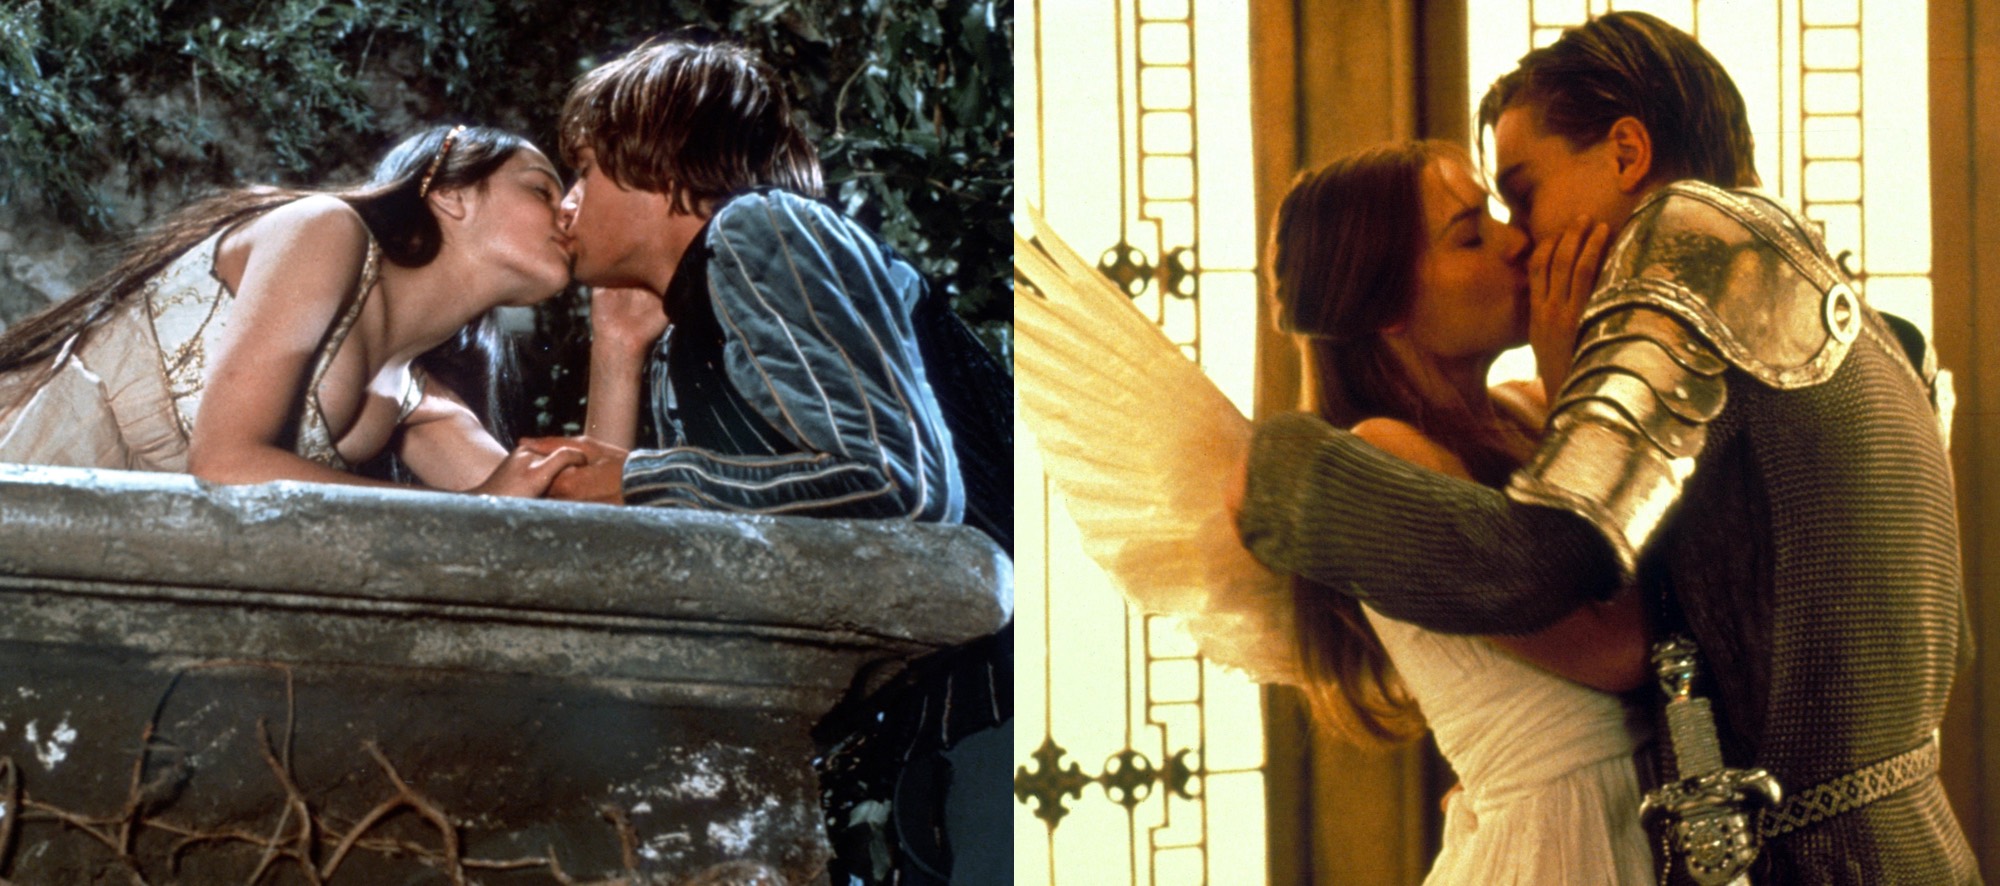 Ромео + Джульетта (Romeo + Juliet), 1996